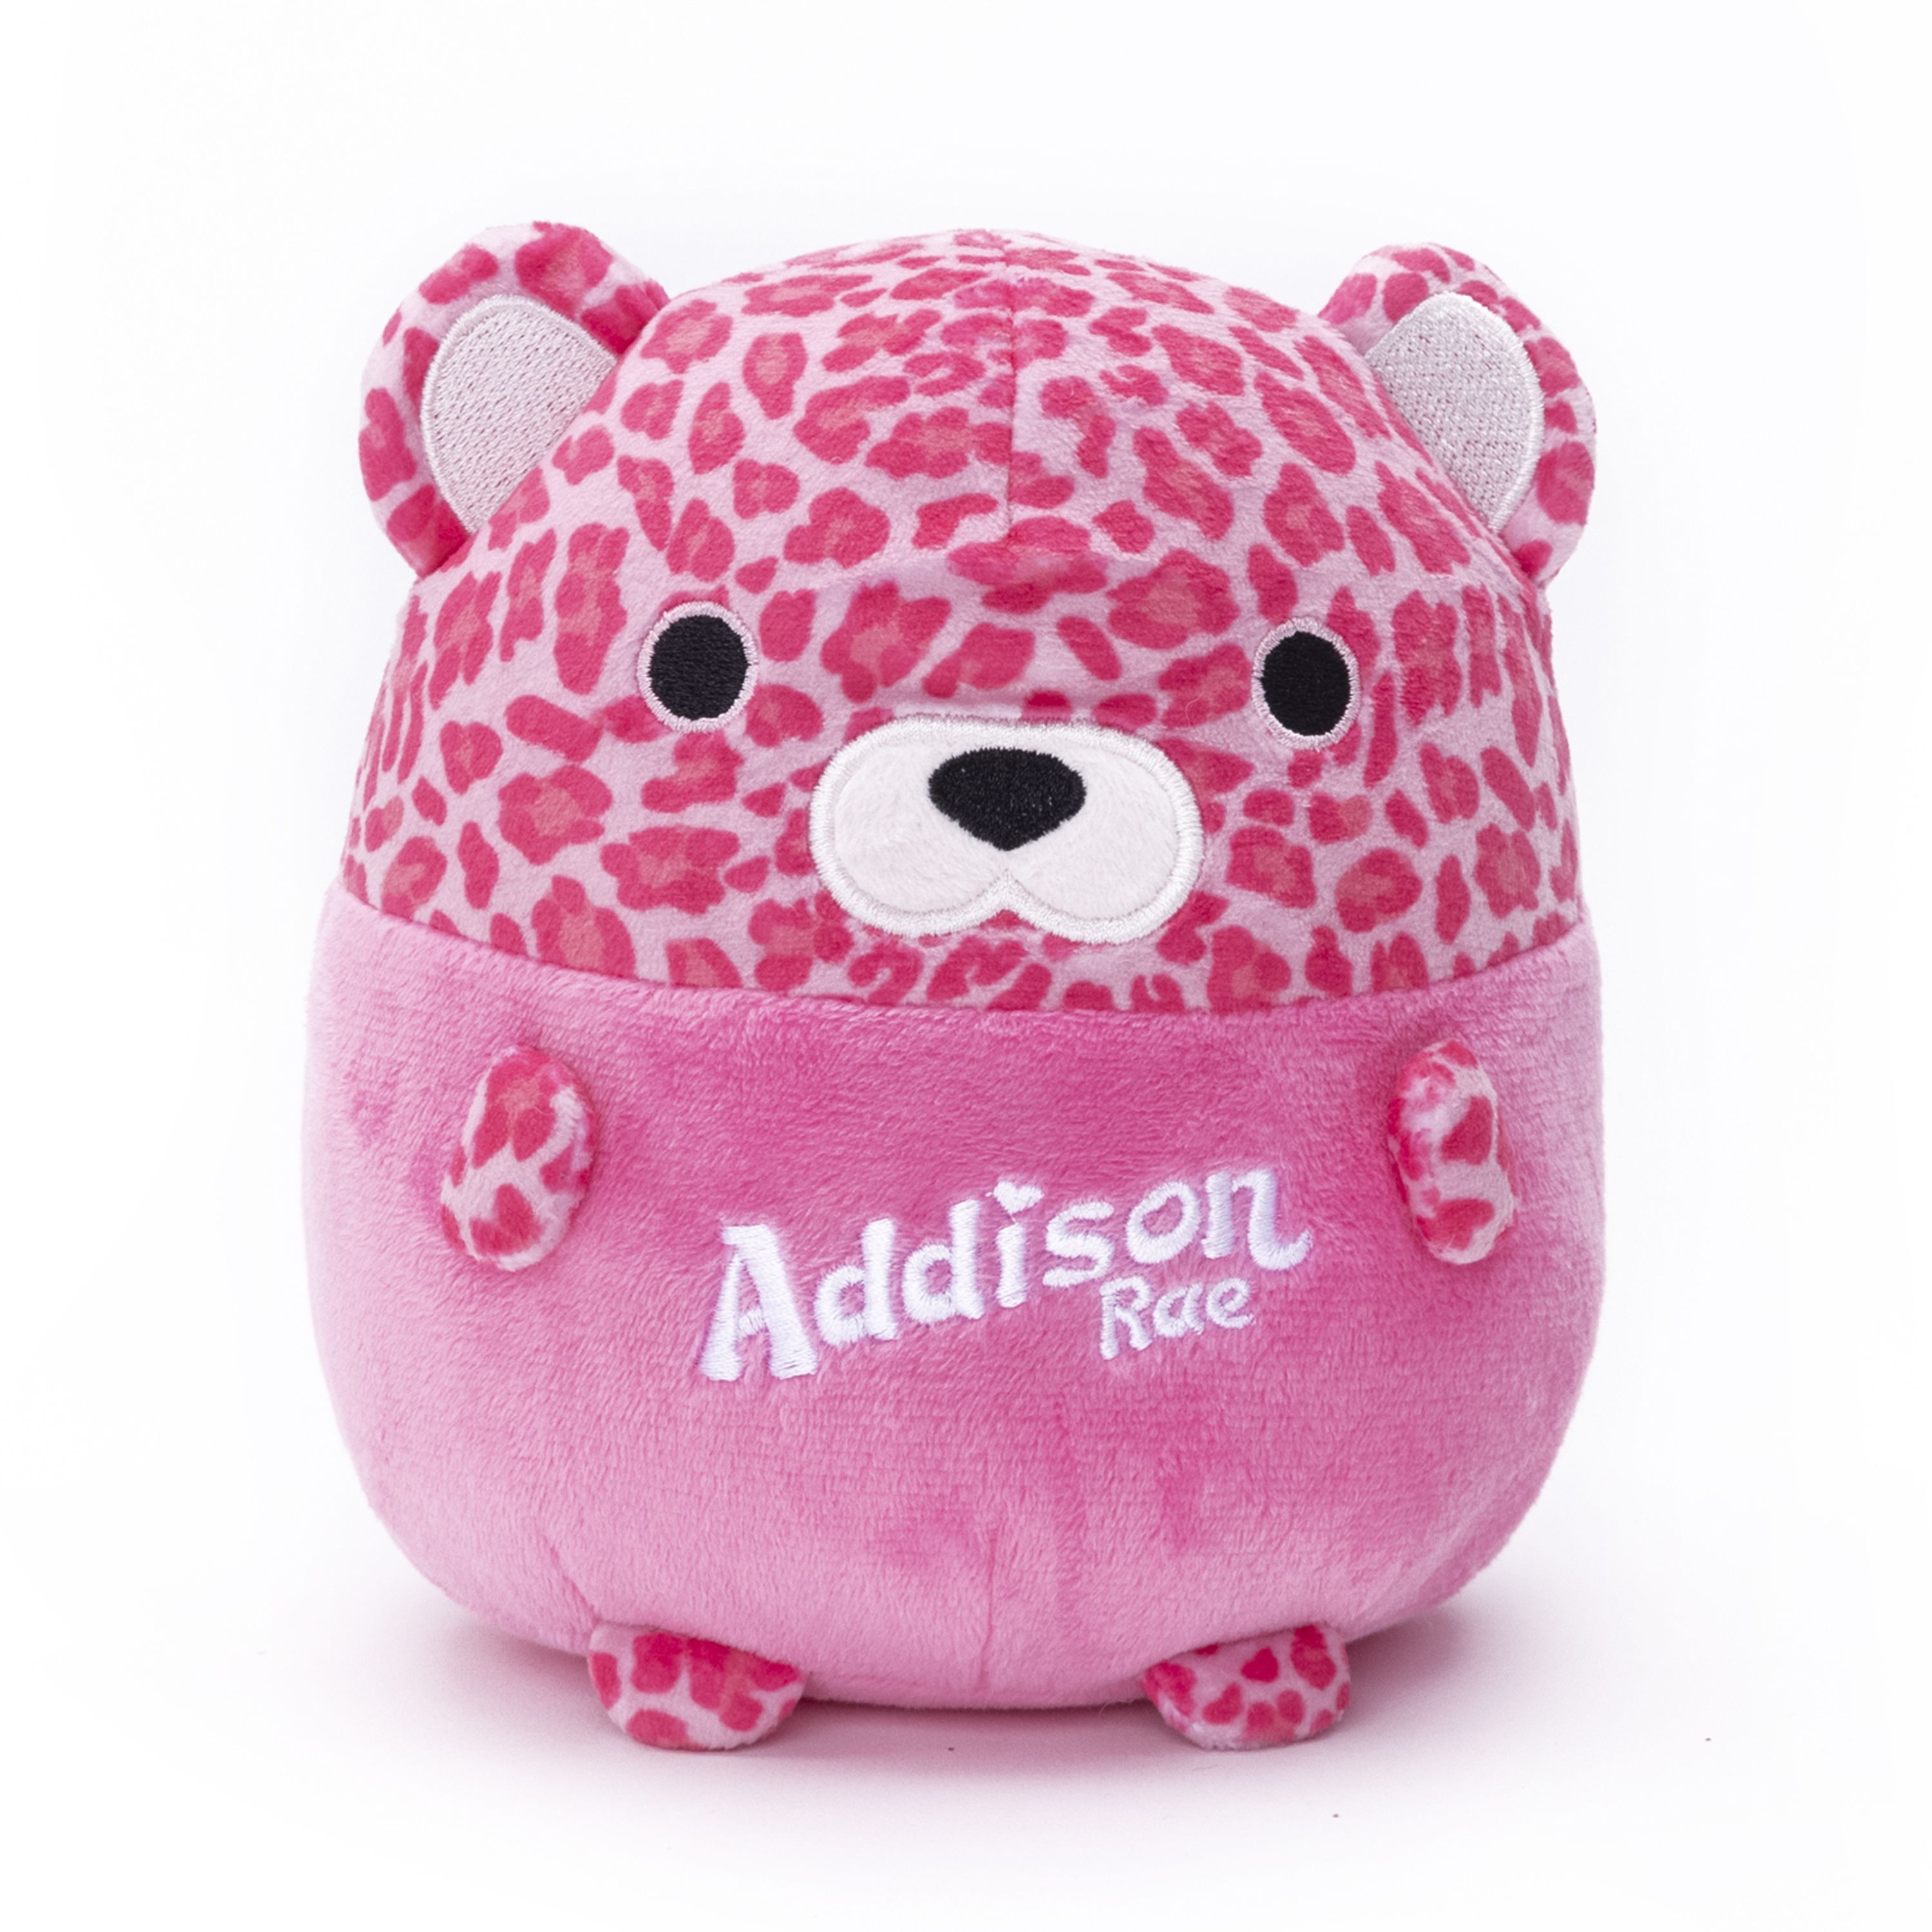 Addison Rae Collectible Plush Cheetah